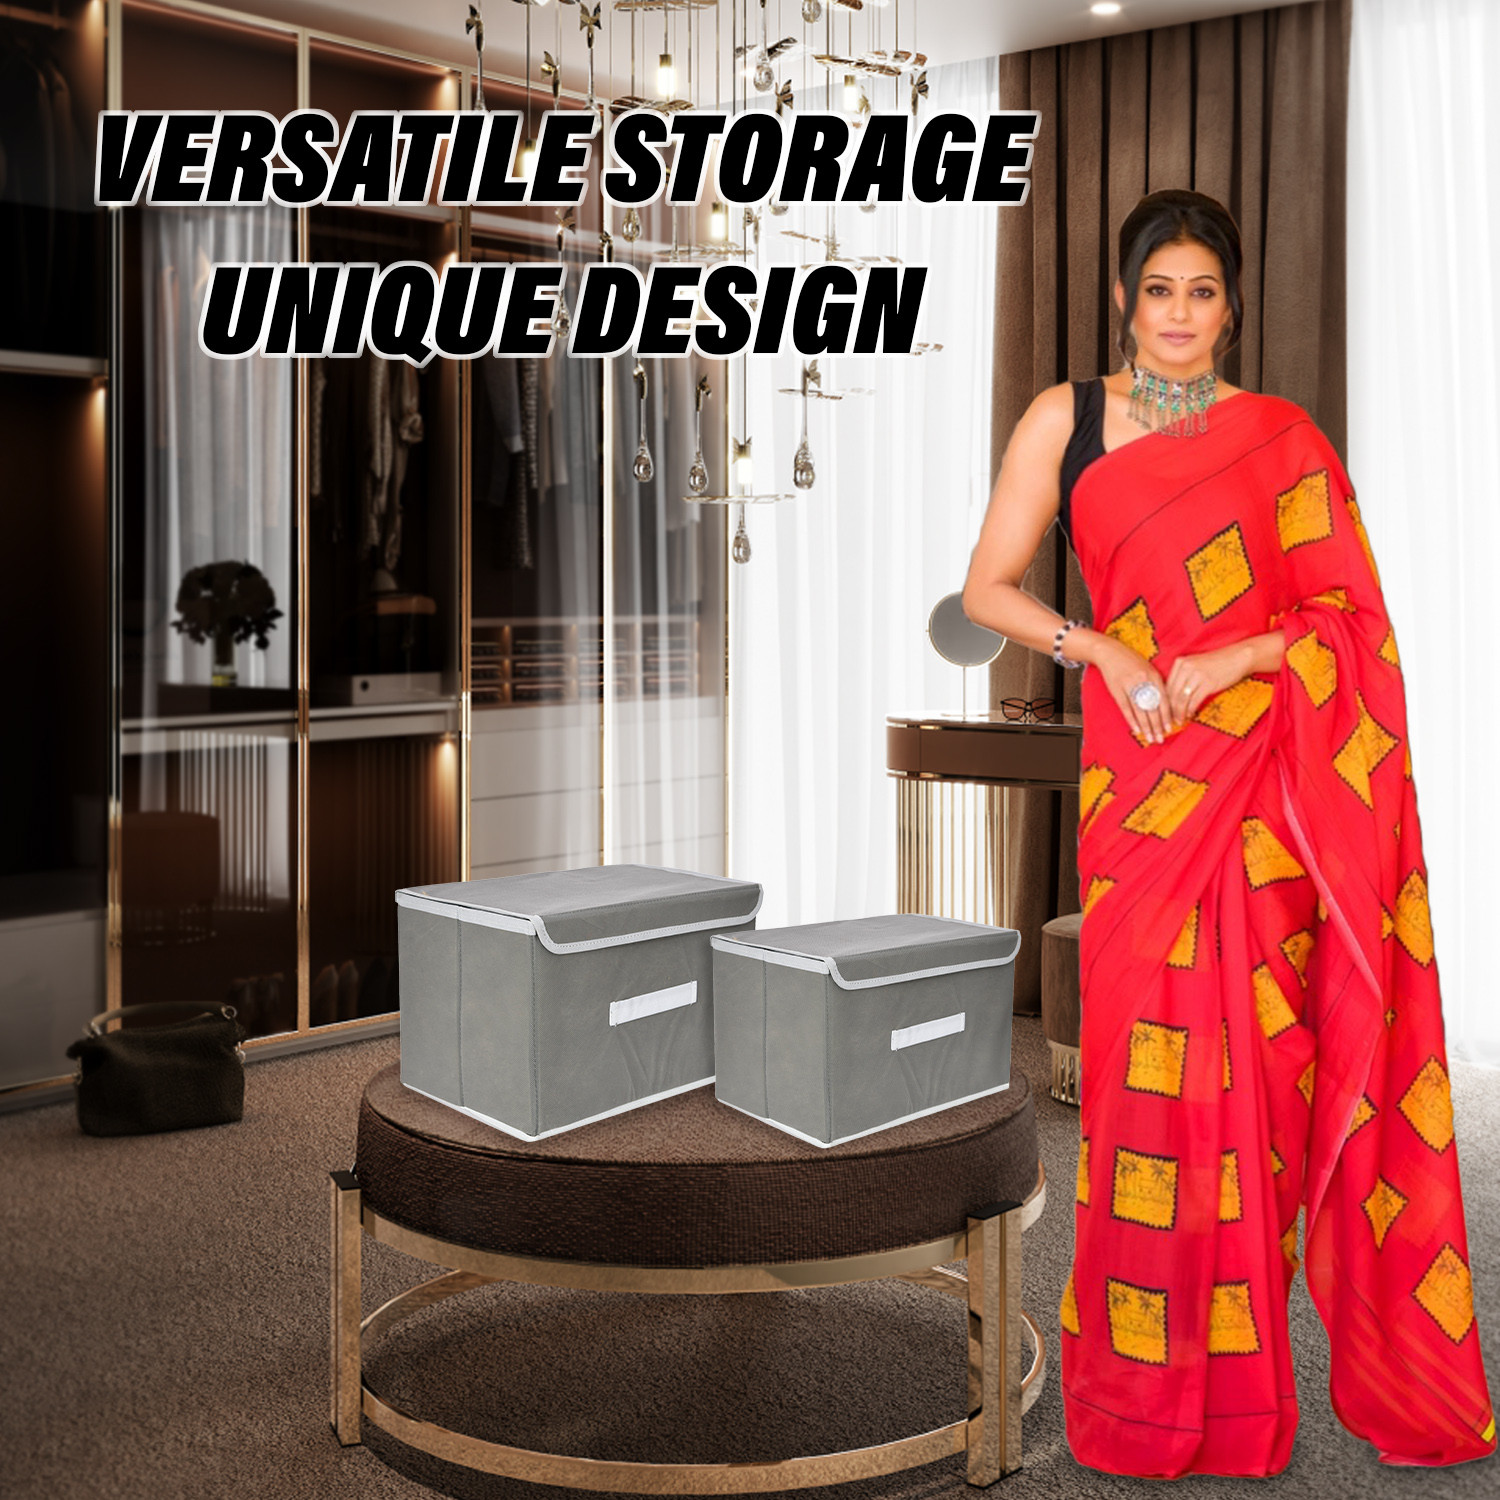 Kuber Industries Drawer Storage Box | Plain Dhakkan Storage Box | Non-Woven Clothes Organizer For Toys | Storage Box with Handle | Medium | Gray